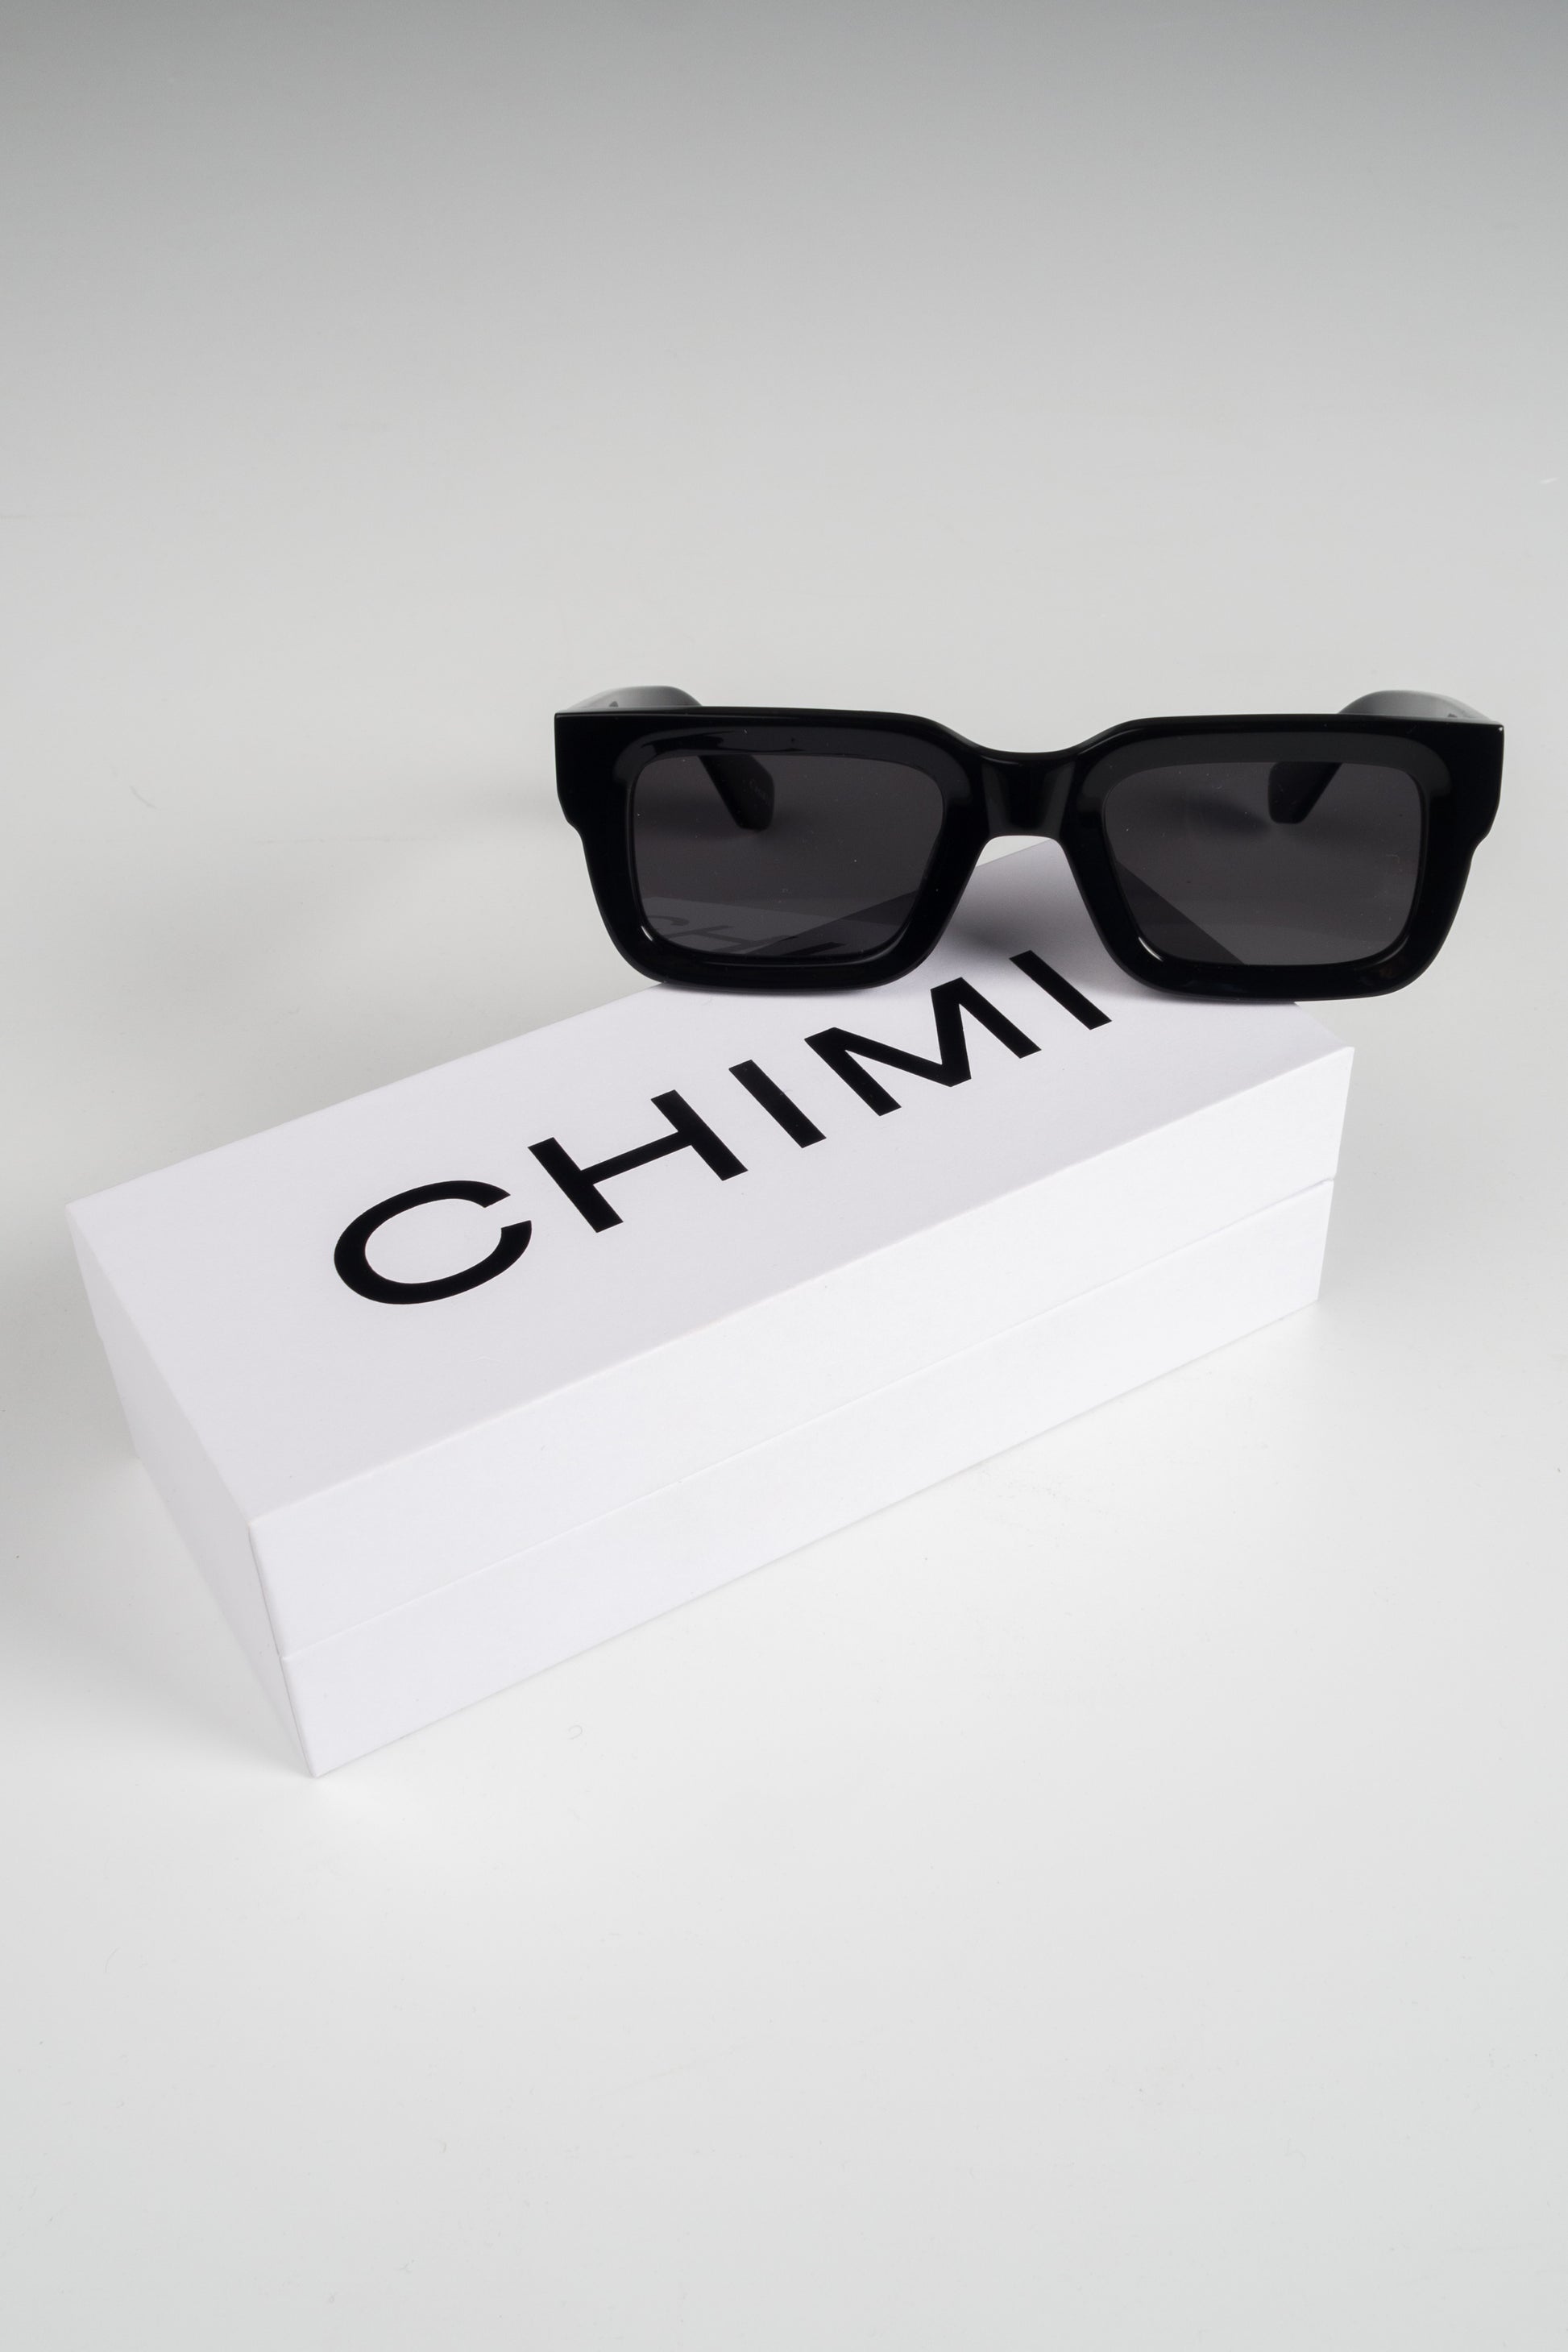 CHIMI 05 aurinkolasit 